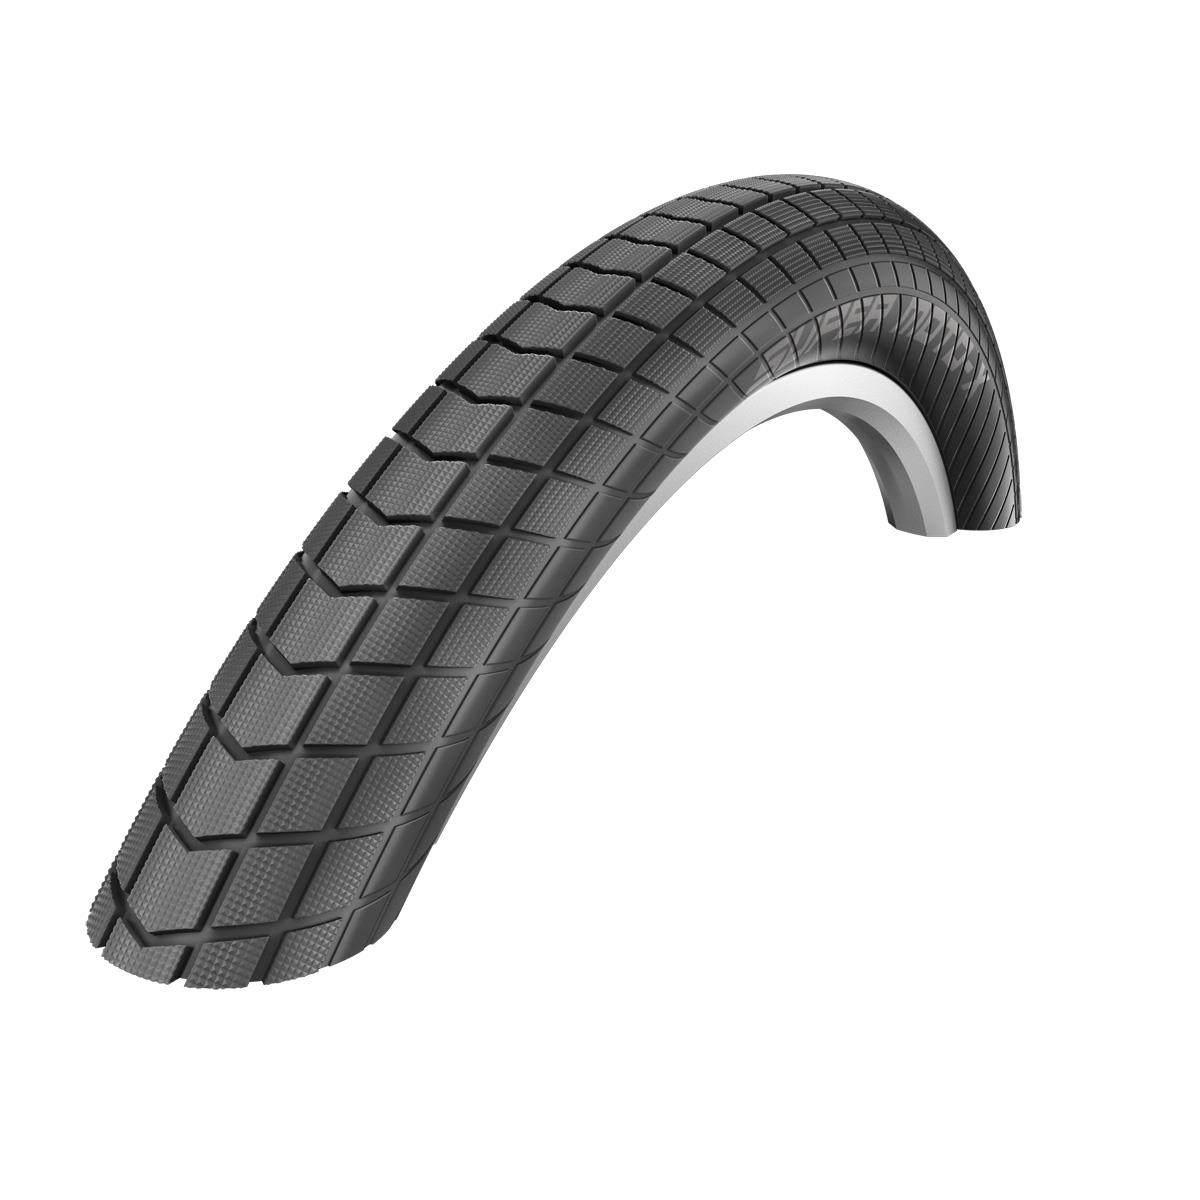 Schwalbe Super Moto X HS 439 Cruiser Bicycle Tire (Black   27.5 x 2.40)